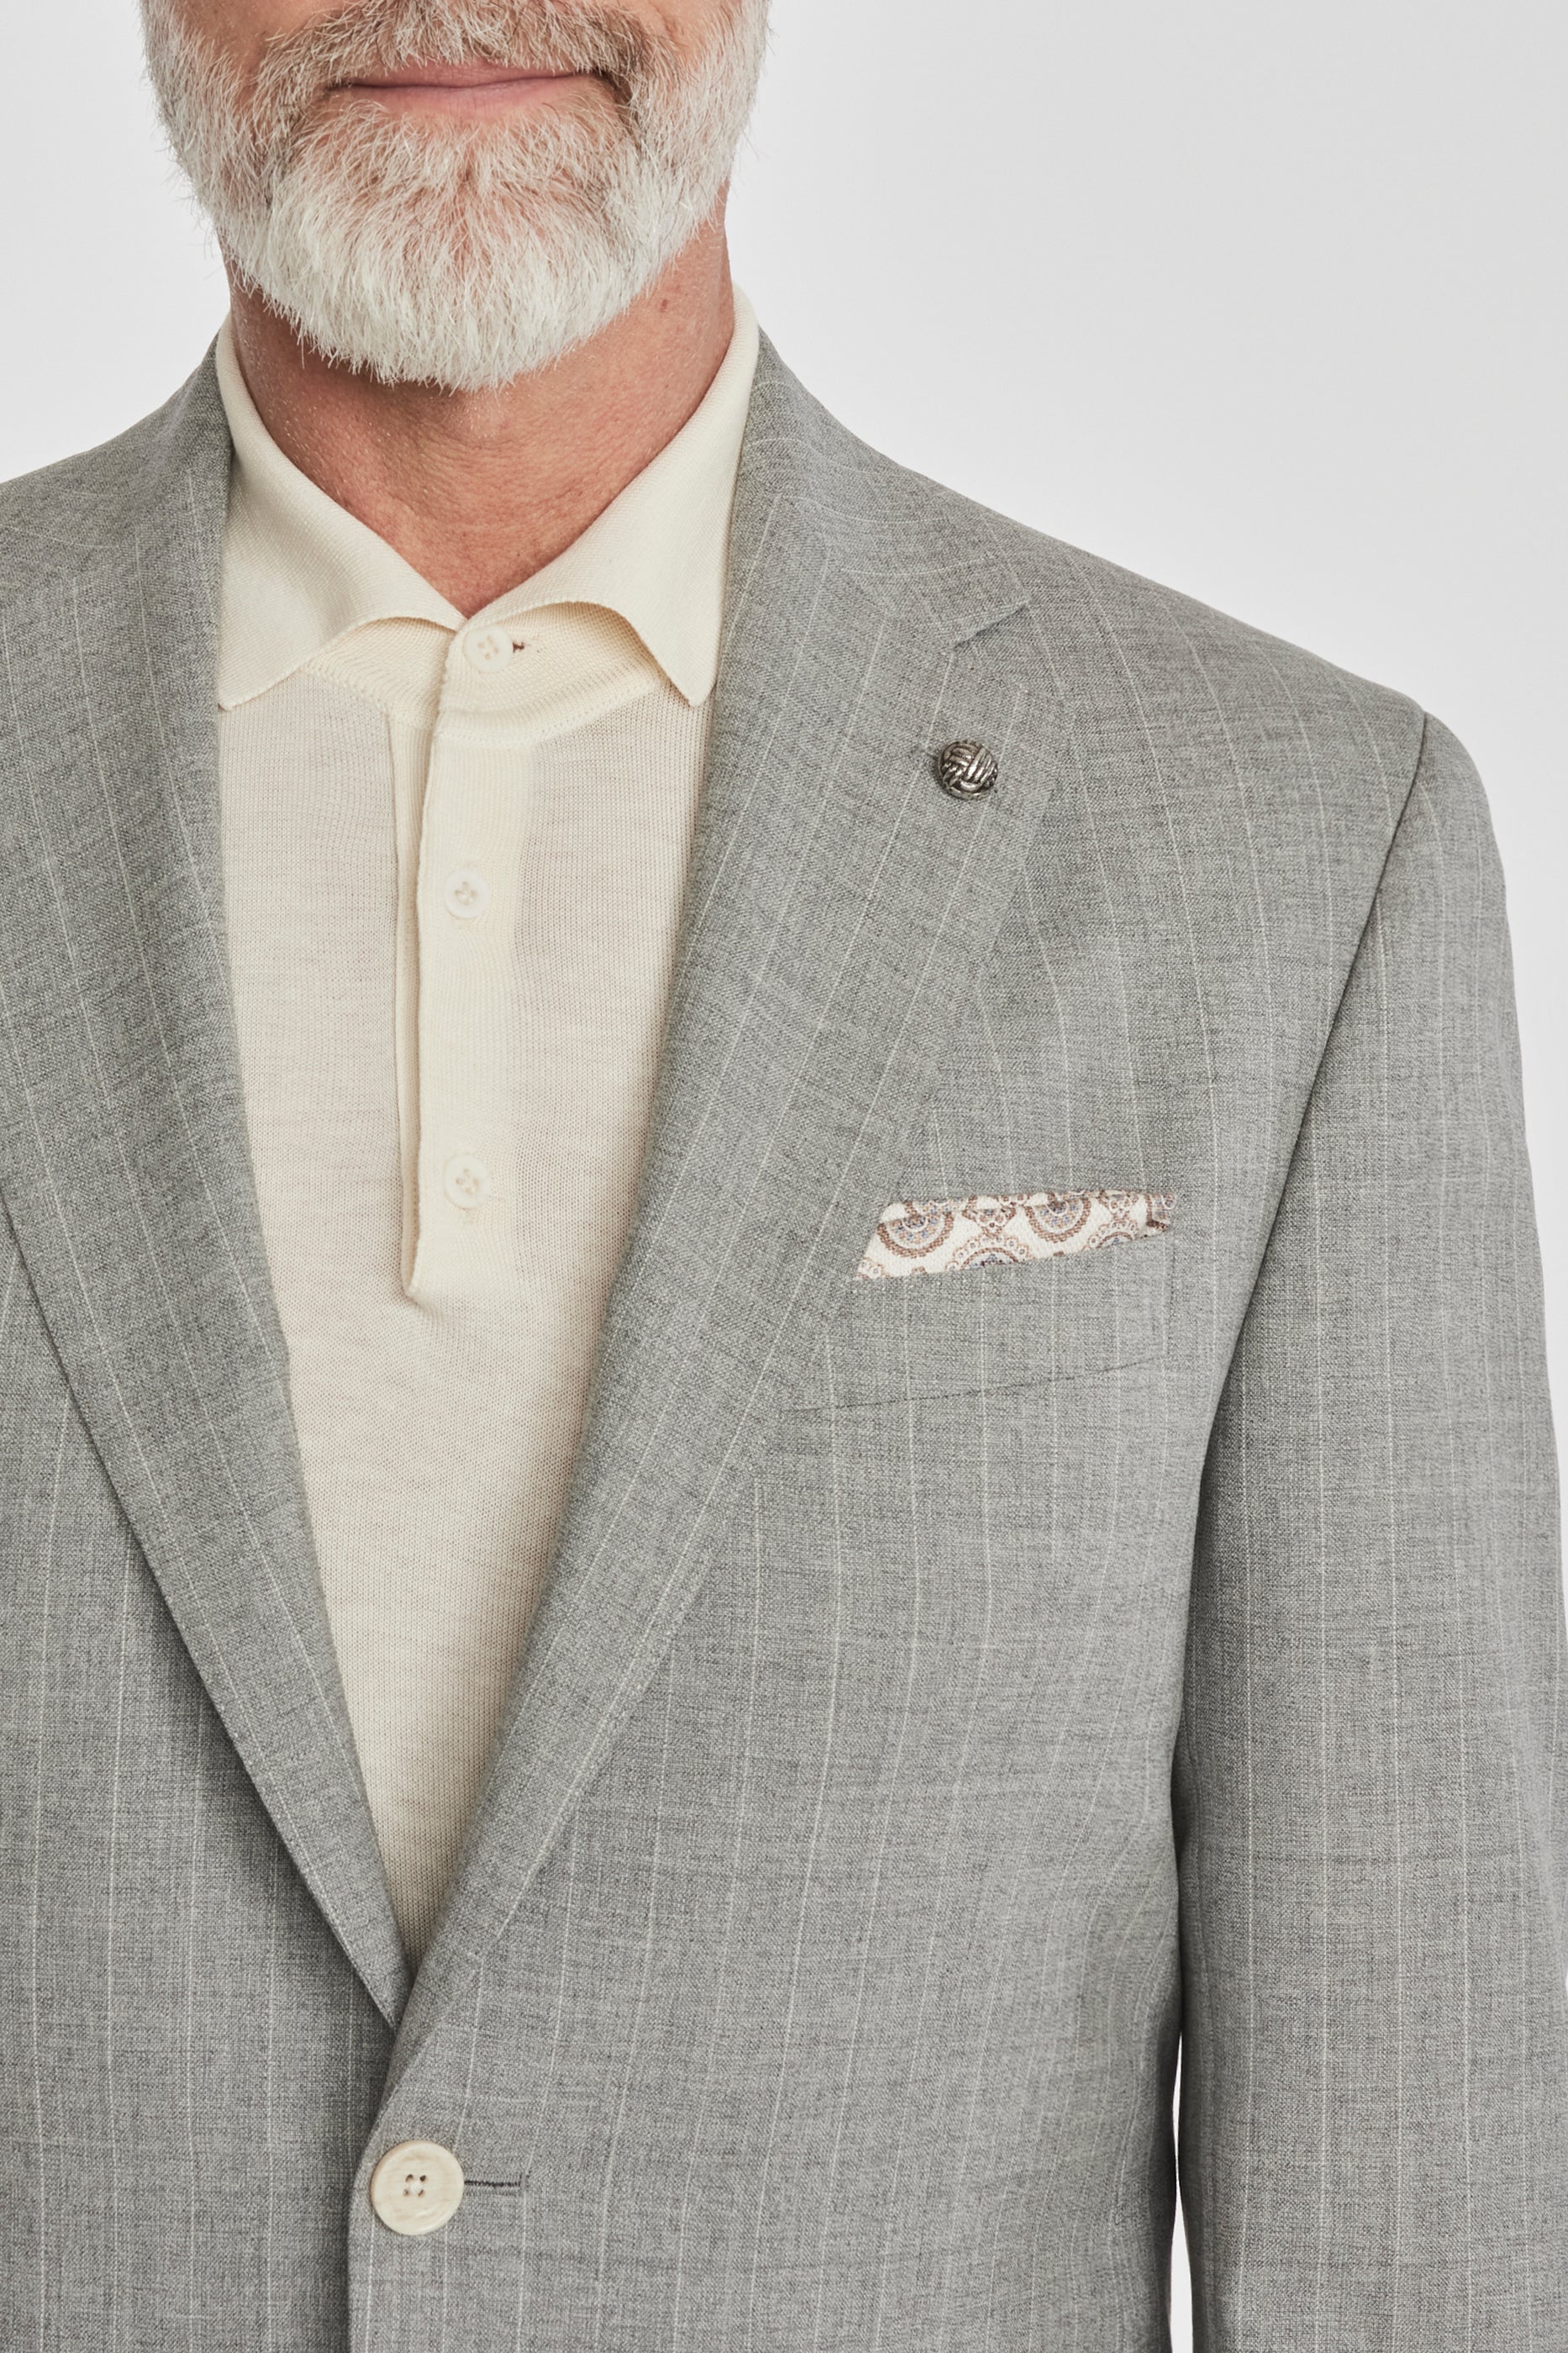 Alt view 2 Esprit Pinstripe Wool Suit in Light Grey and Ecru